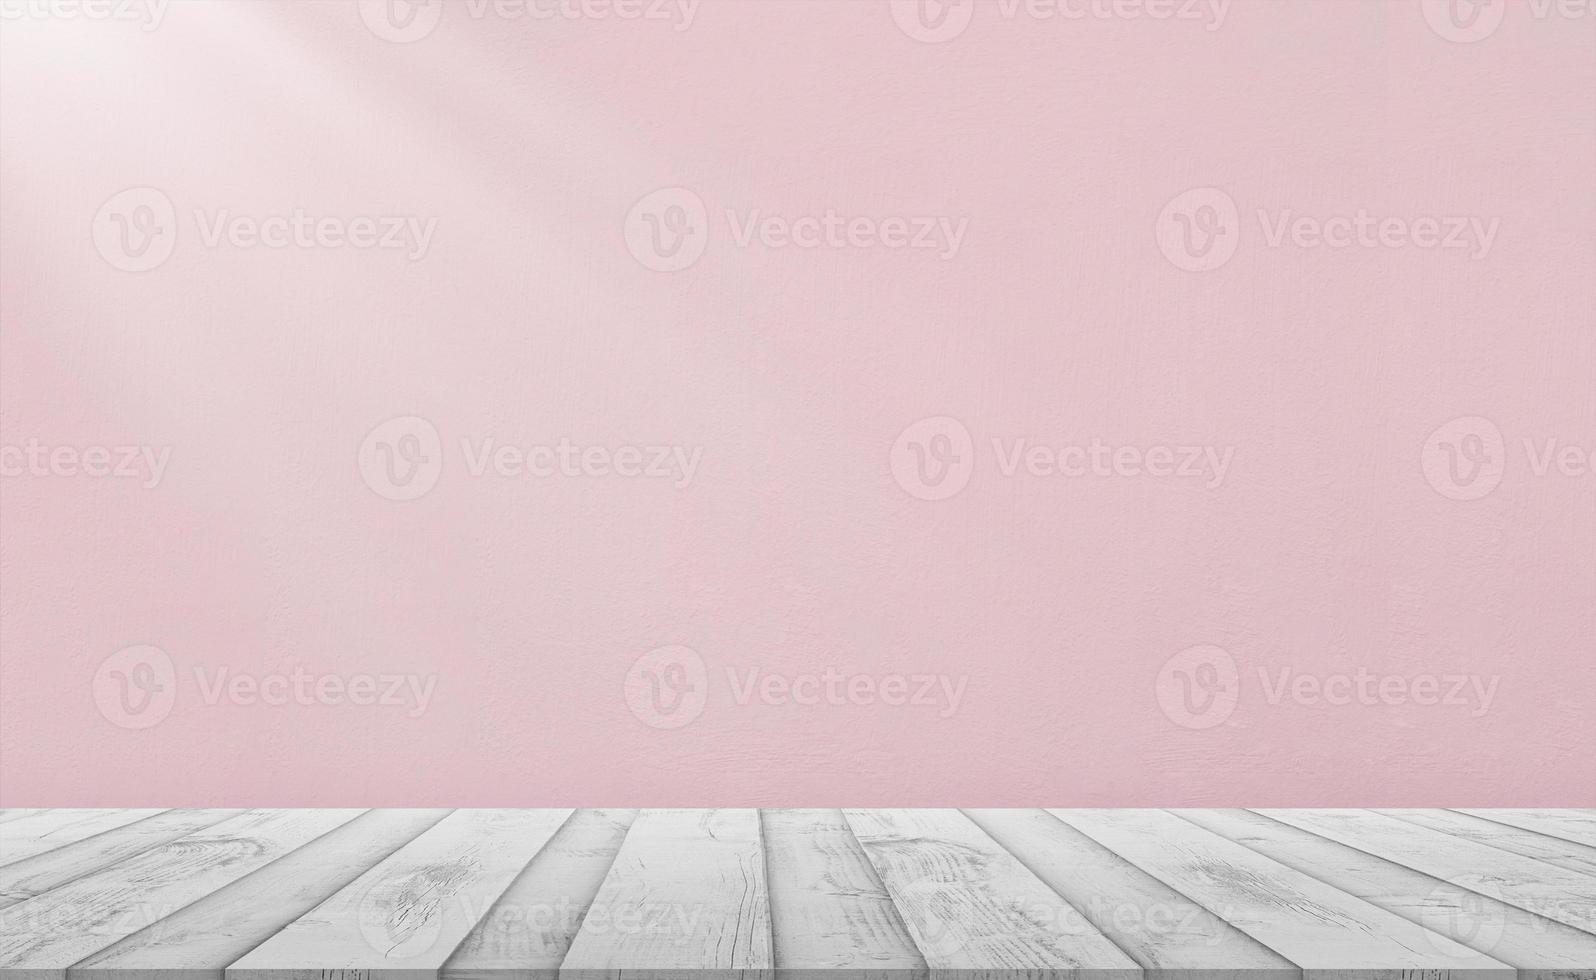 hormigón pared textura con blanco madera parte superior mesa de madera piso con grano superficie en beige cemento fondo exterior antecedentes con borracho estuco en edificio, horizonte pared pintado plano desvanecerse pastel foto